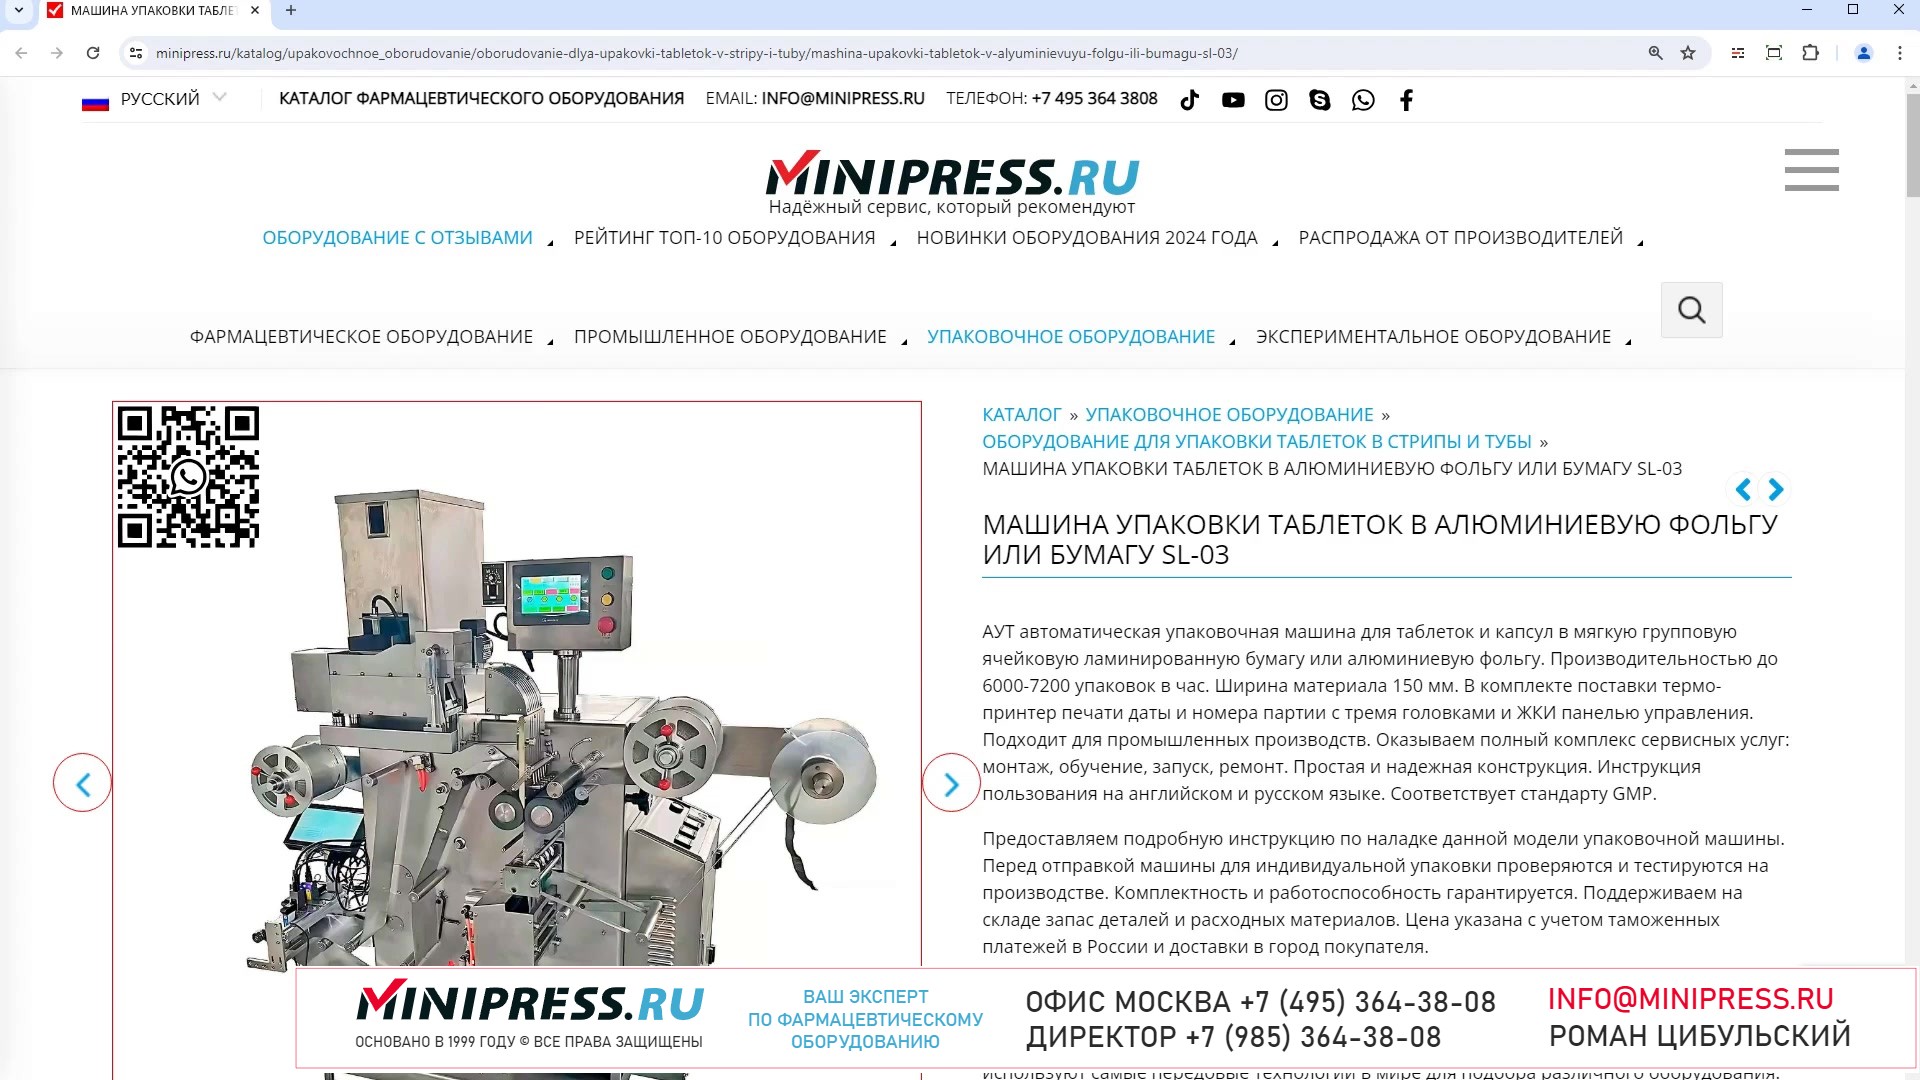 Minipress.ru Машина упаковки таблеток в алюминиевую фольгу или бумагу SL-03